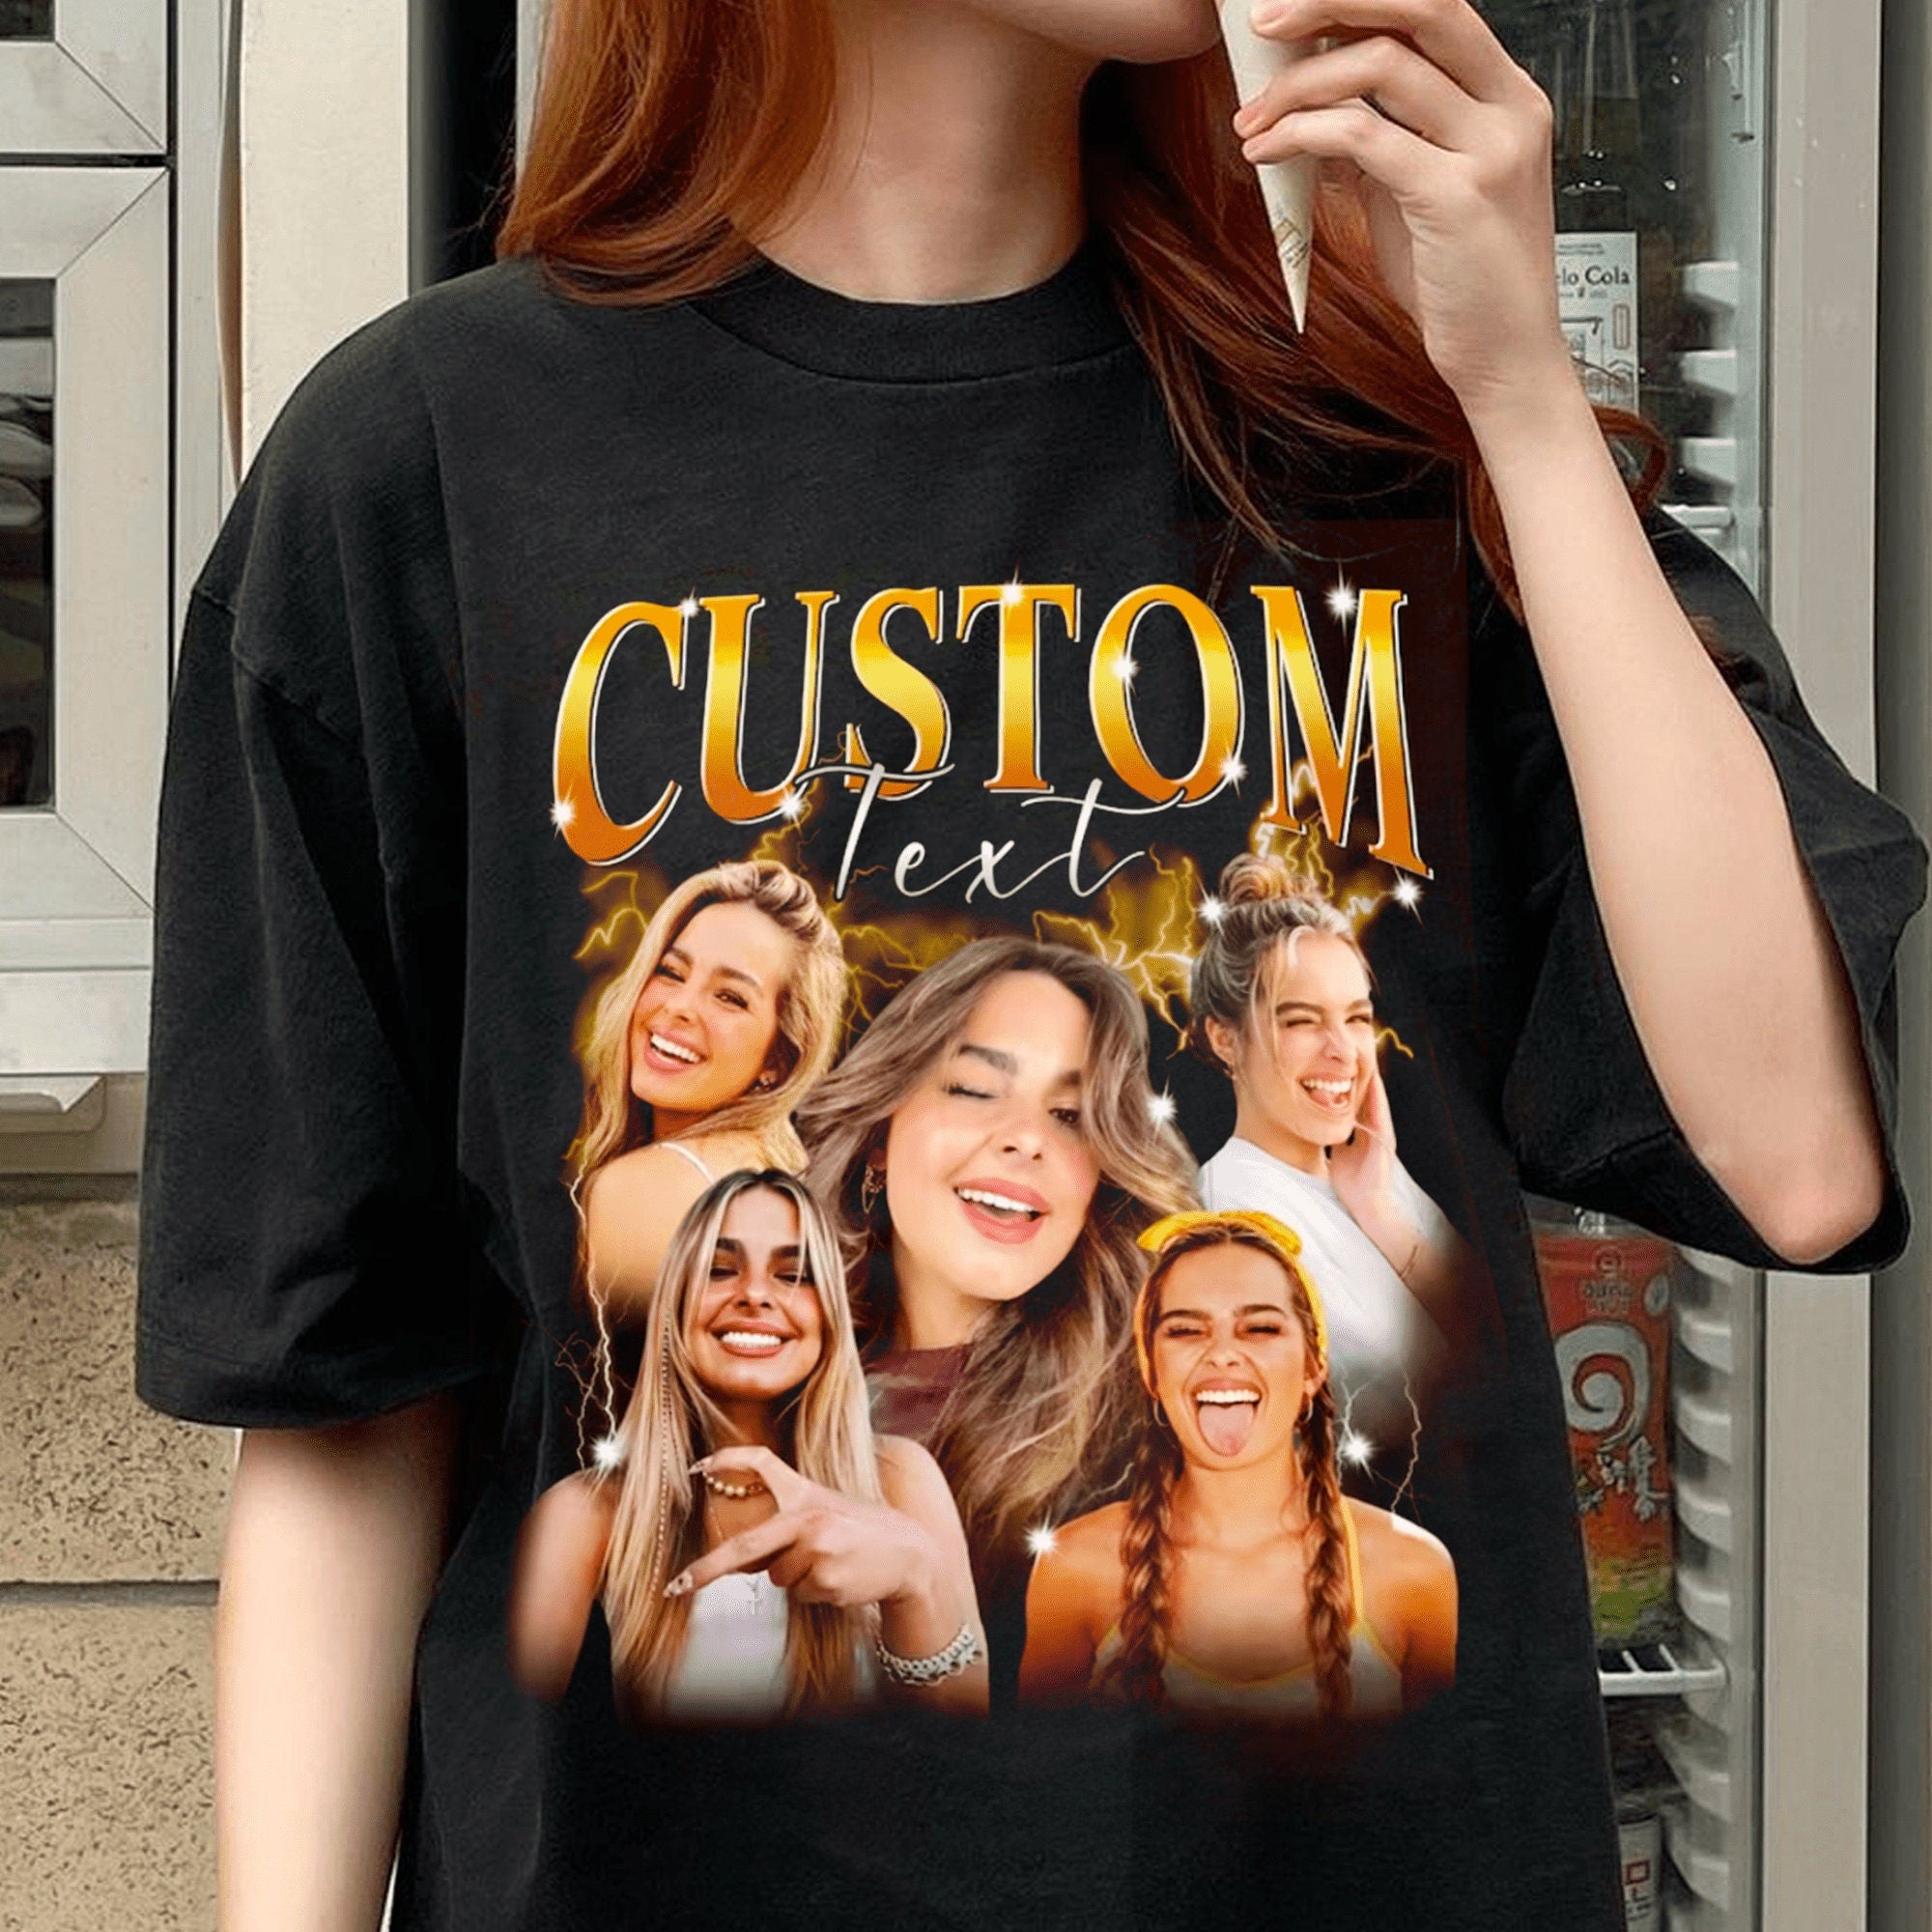 Explore Custom T-Shirts